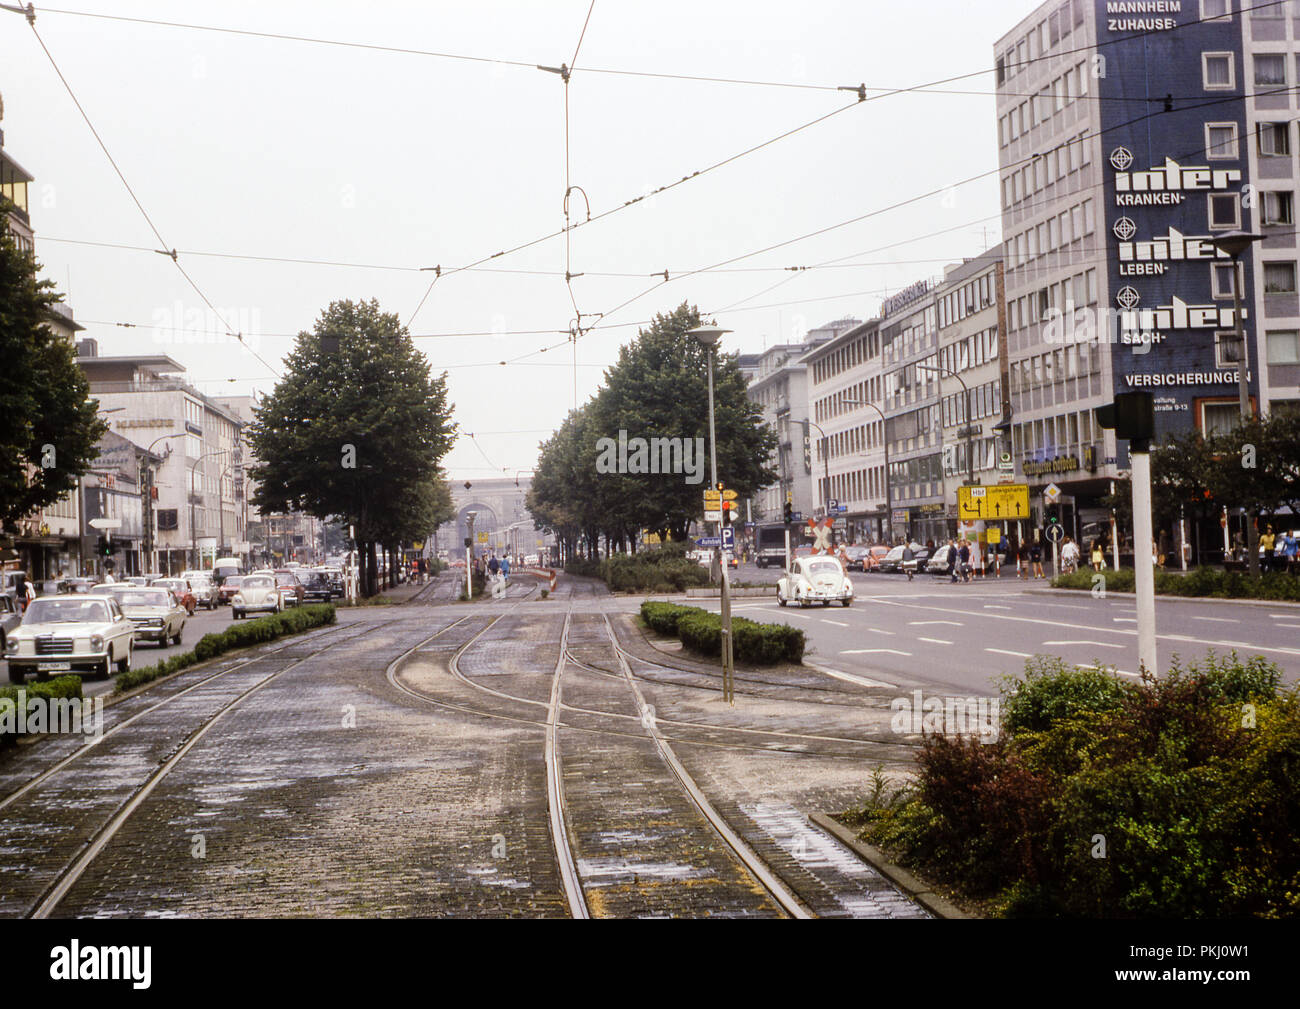 Mannheim Hauptbahnhof, crossroads of Bismarckstrasse and Kaiserring, Mannheim, Germany. Original archive image taken in August 1973. Stock Photo